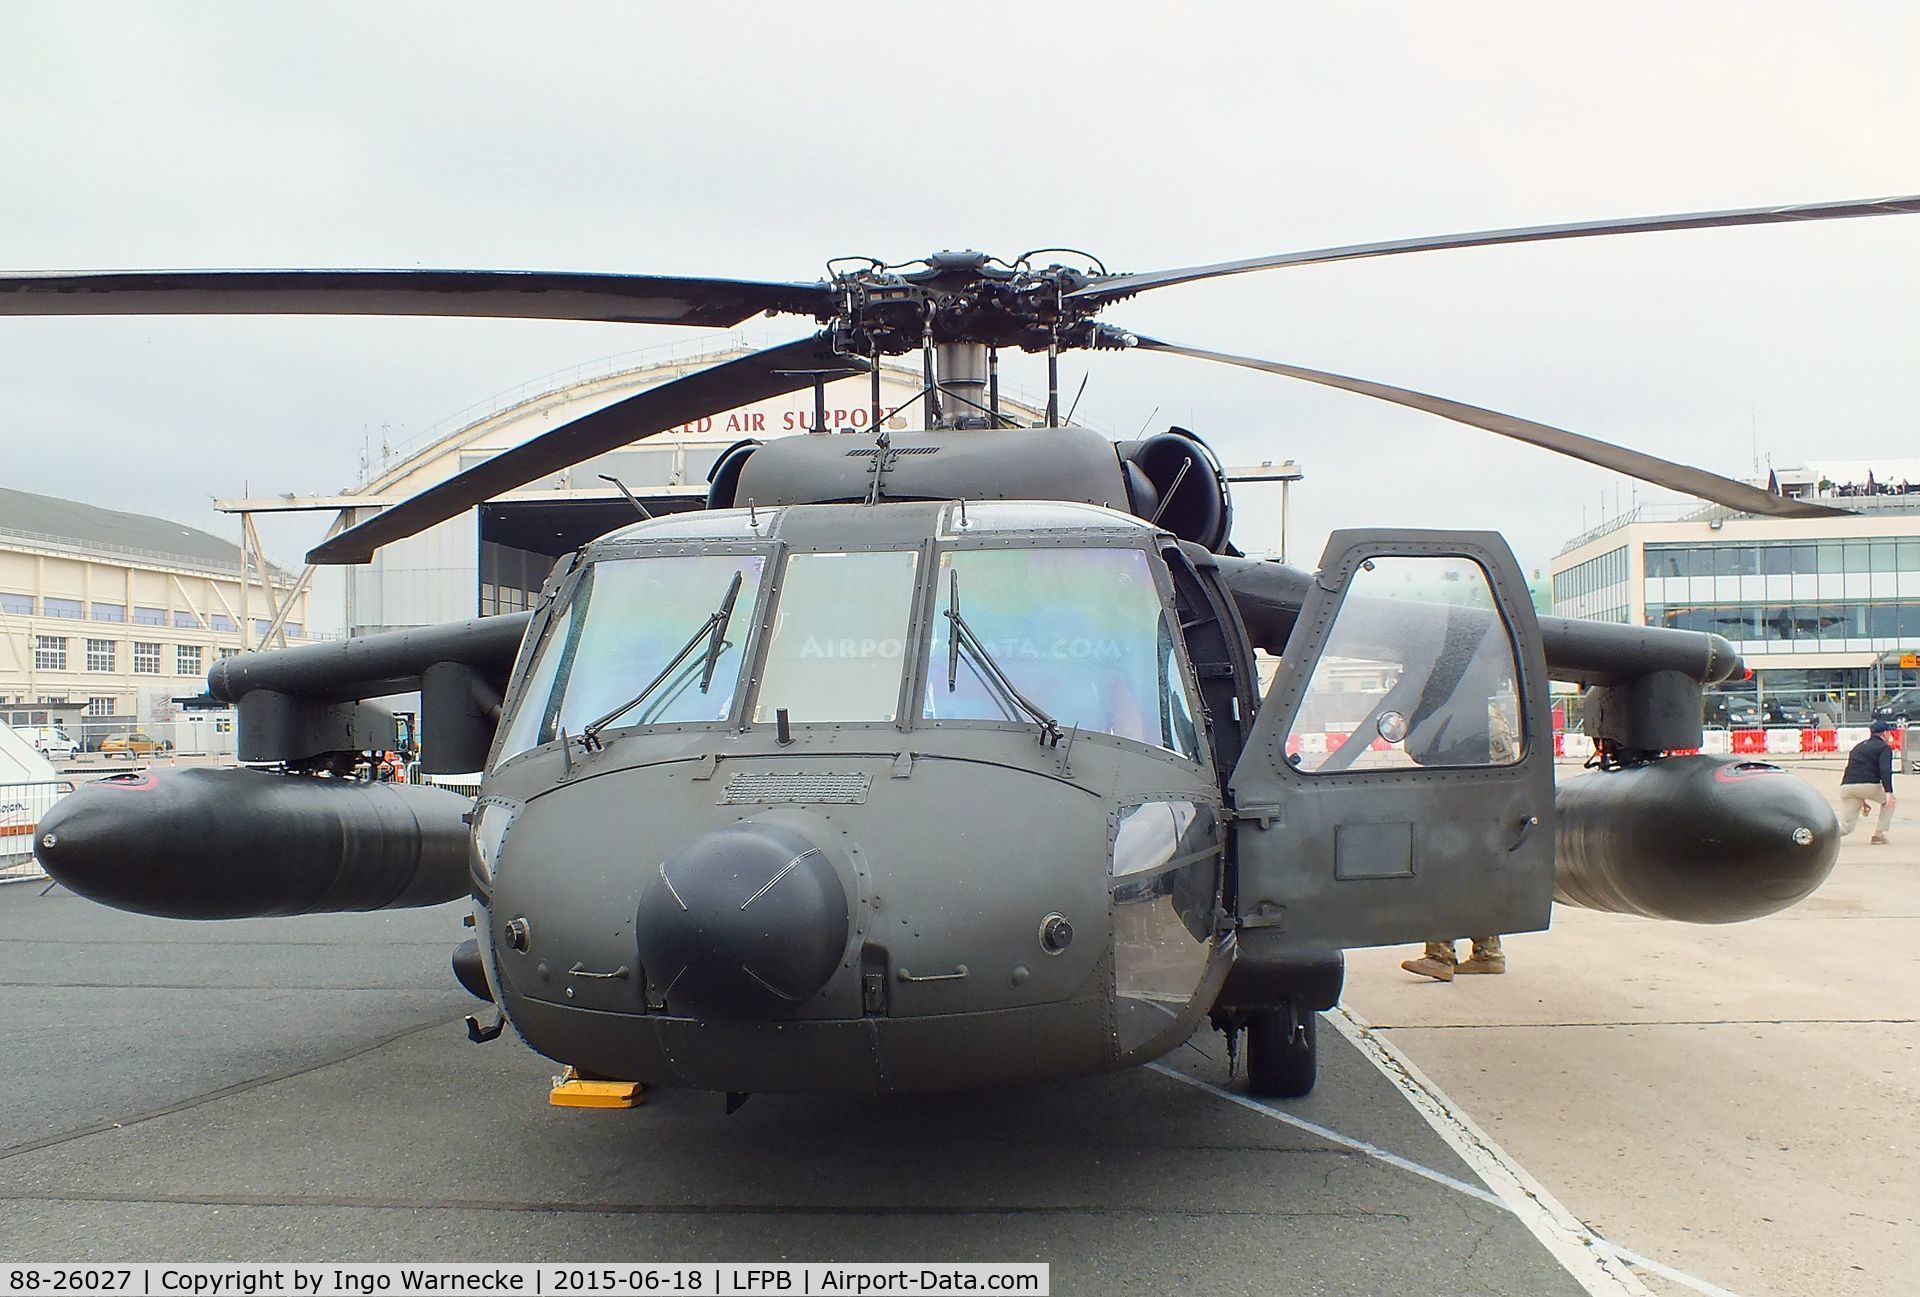 88-26027, 1988 Sikorsky UH-60A Black Hawk C/N 70-1236, Sikorsky UH-60A (C) Black Hawk (S-70A) of the US Army at the Aerosalon 2015, Paris